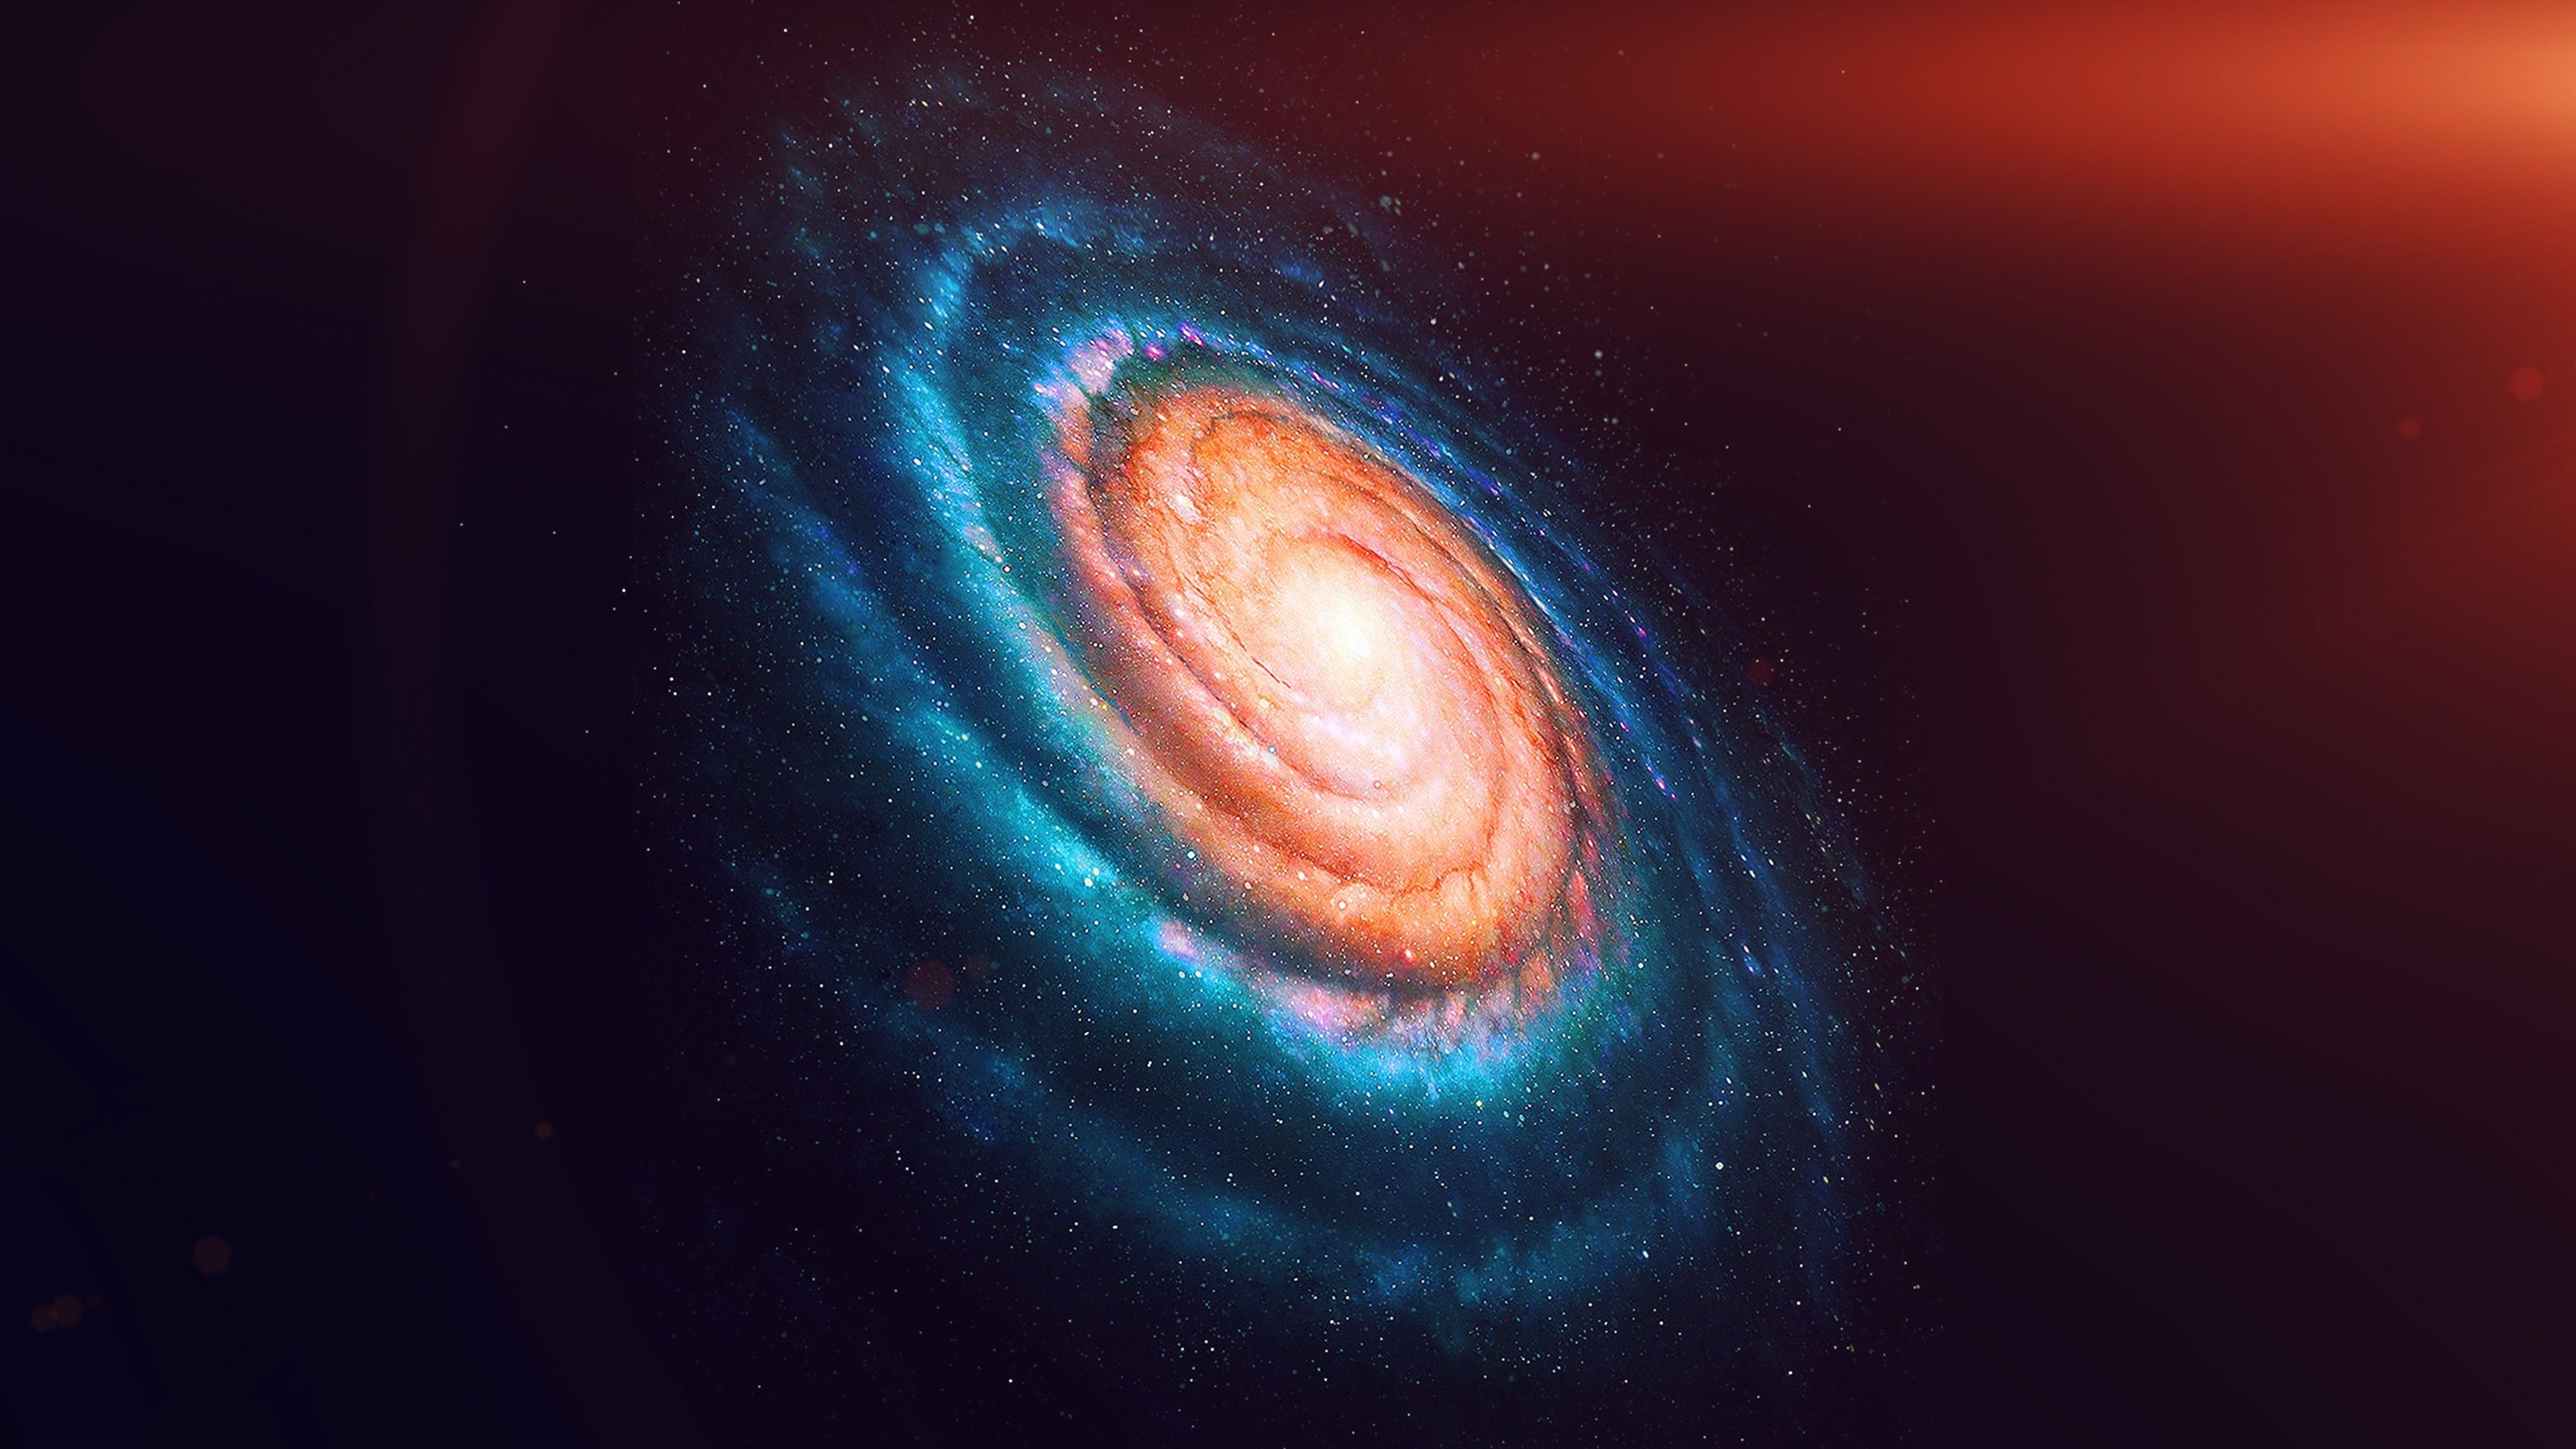 Galaxy 4k, HD Digital Universe, 4k Wallpaper, Image, Background